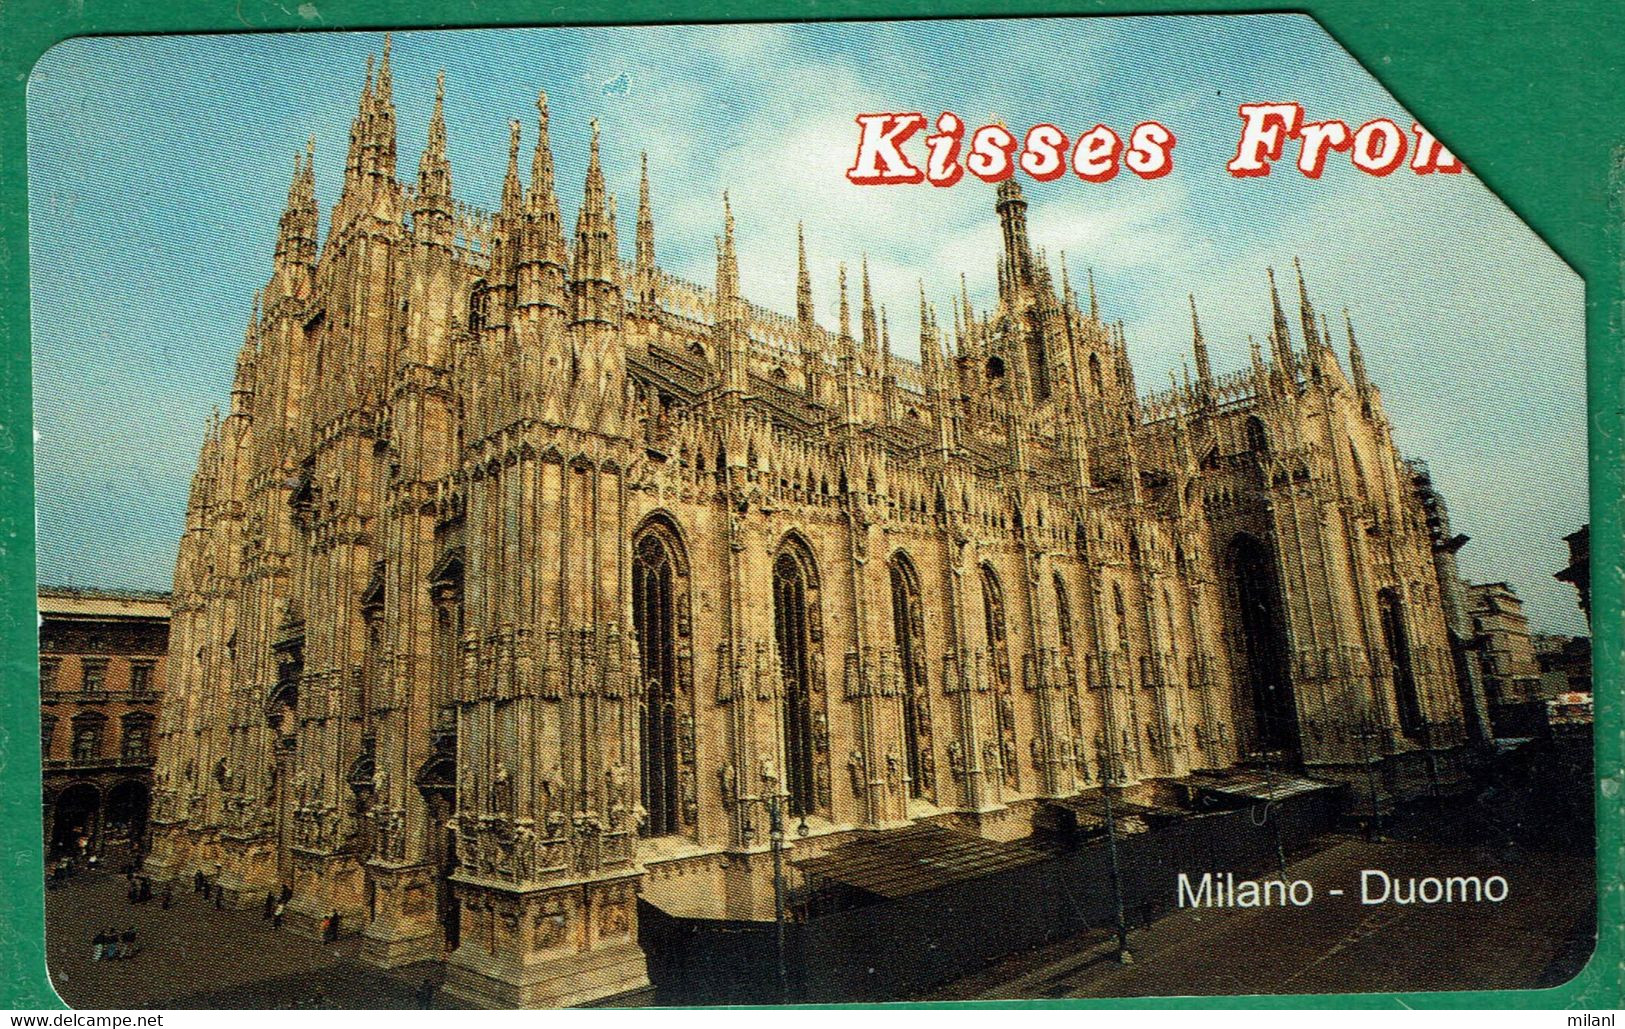 Kisses From - Milano - Duomo - Openbaar Getekend